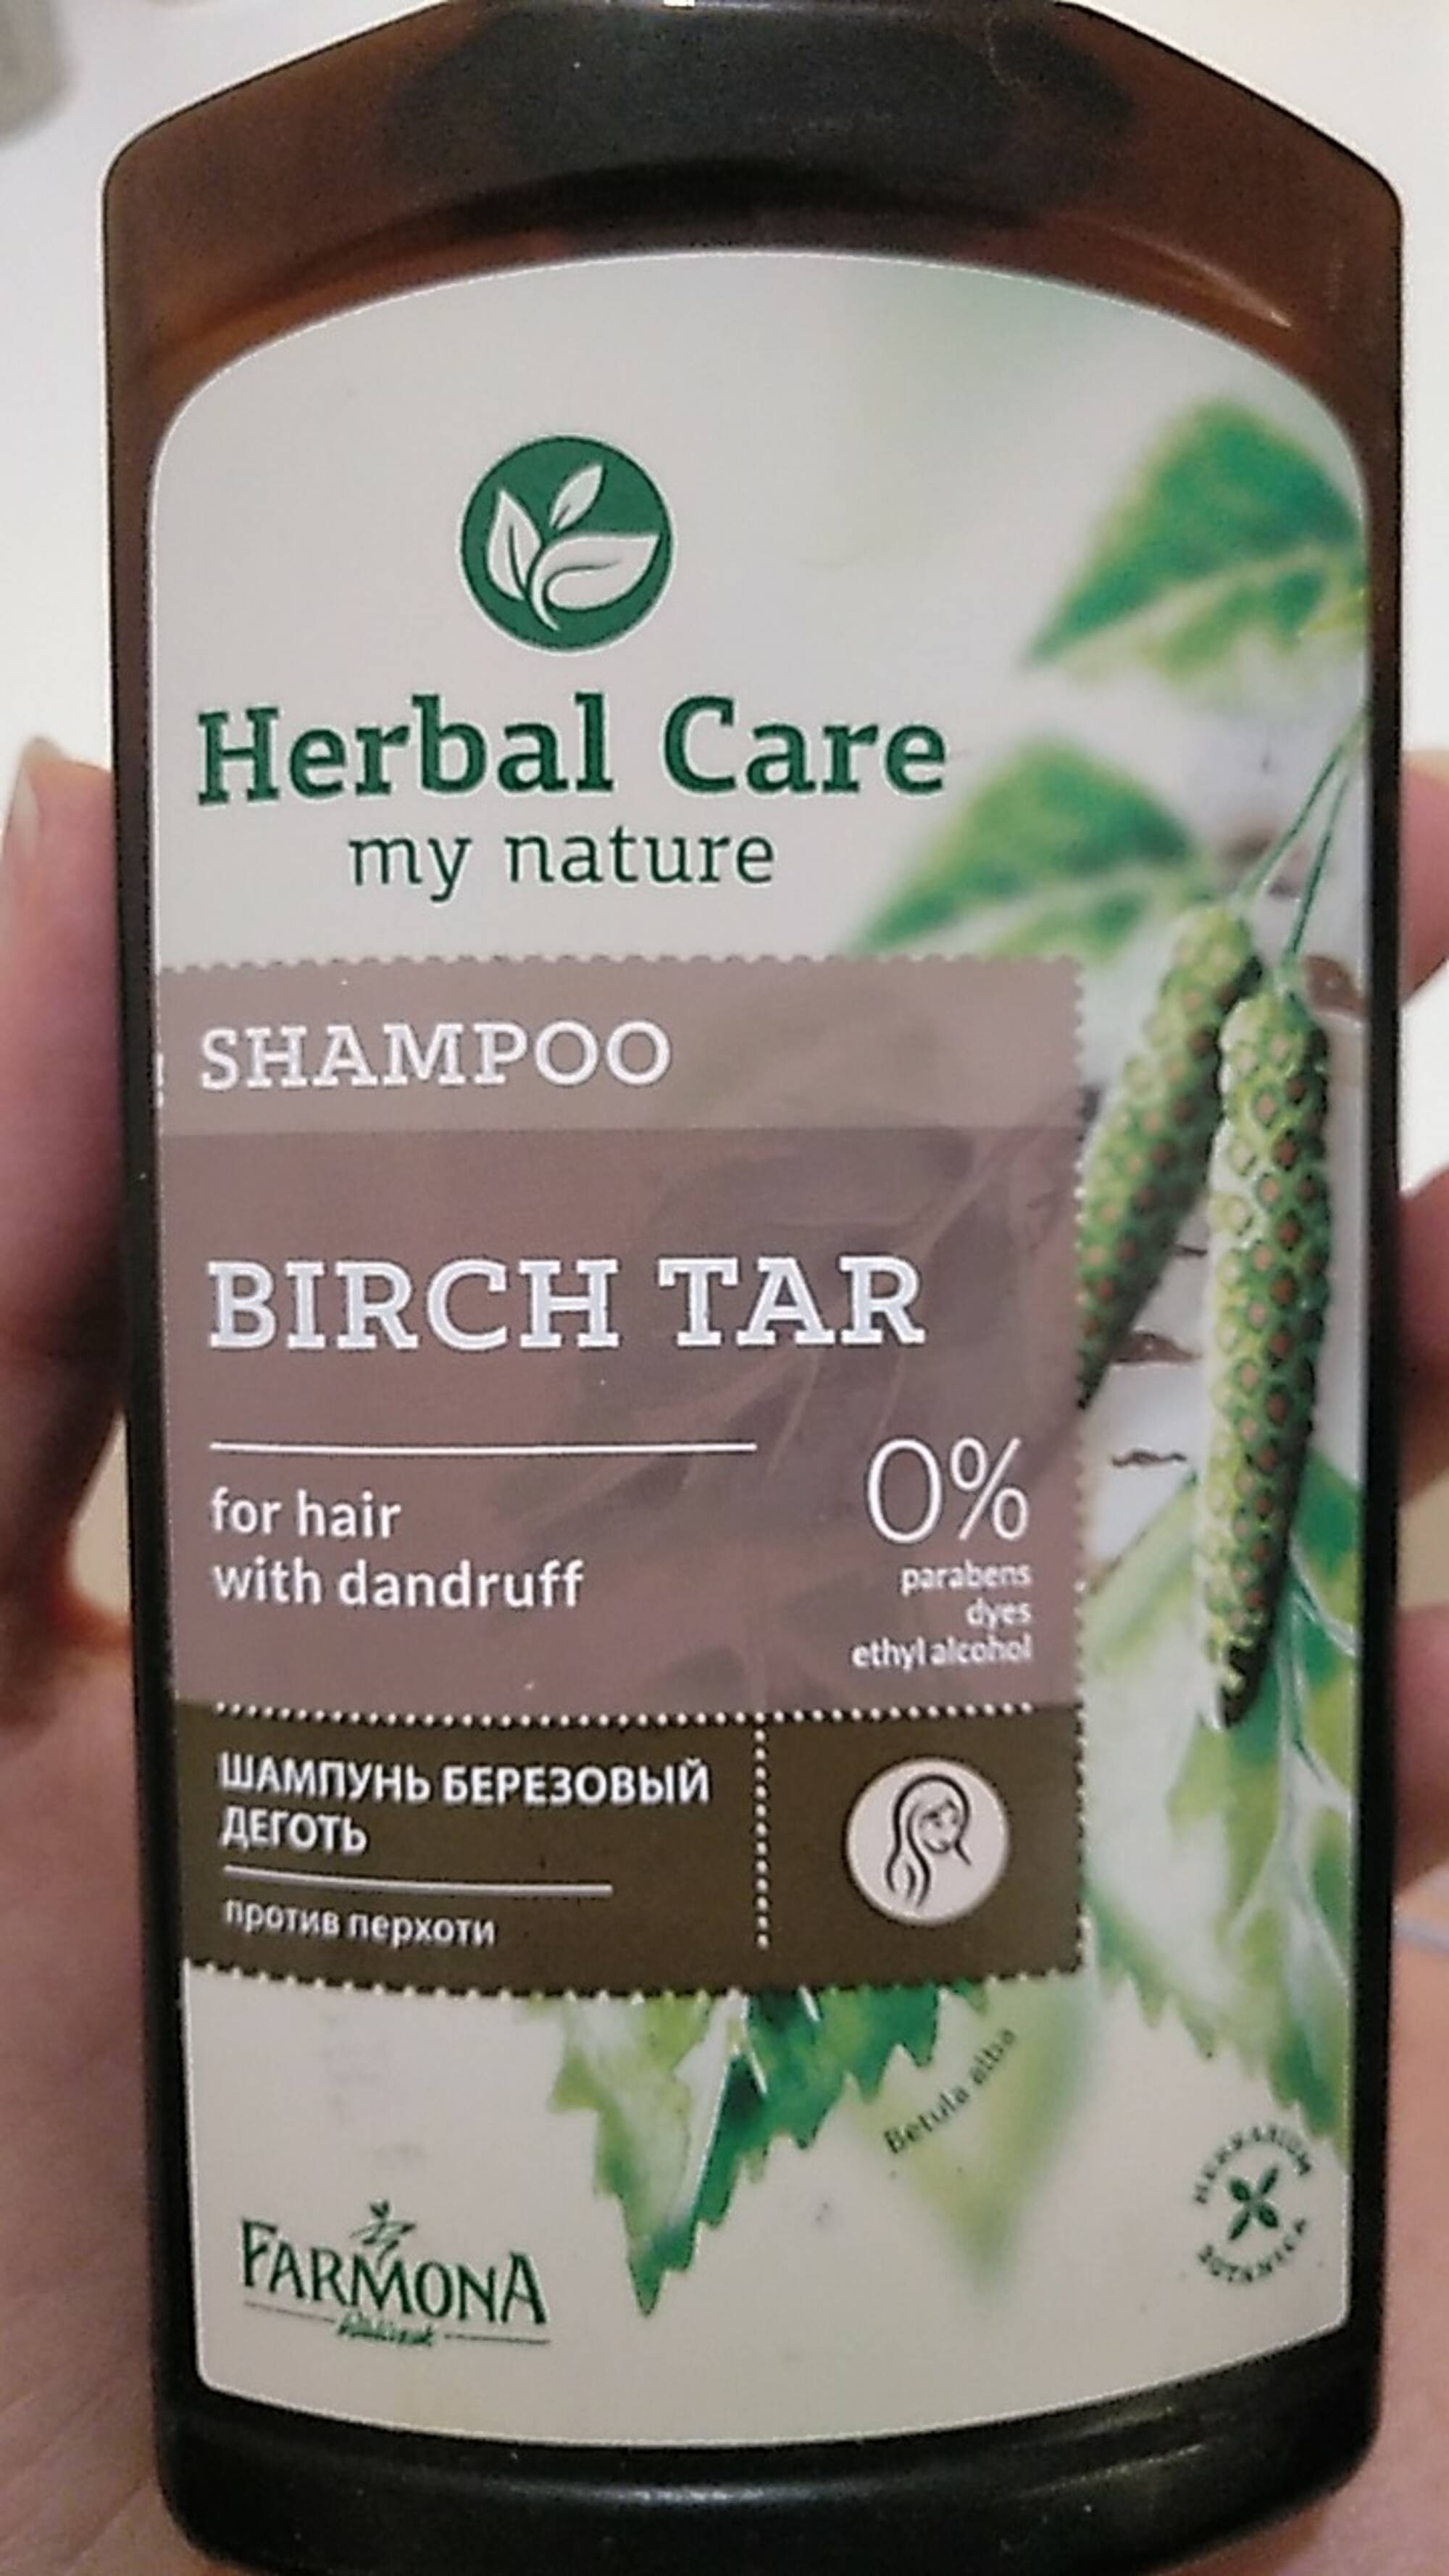 FARMONA - Herbal care birch tar - Shampoo